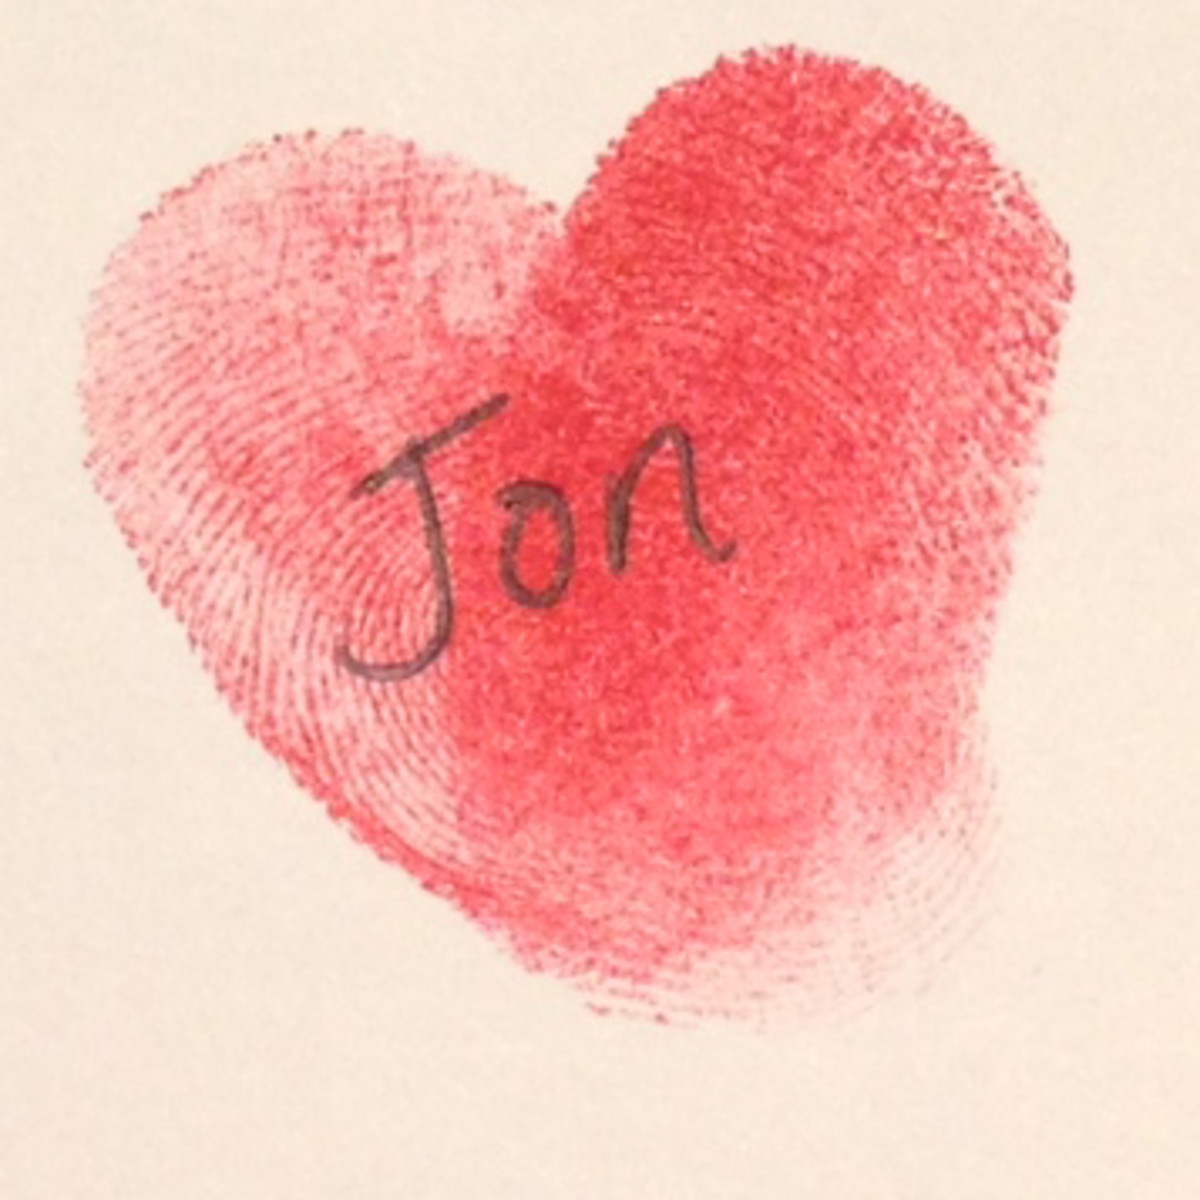 Thumbprint Heart volunteerspot valentine greeting idea